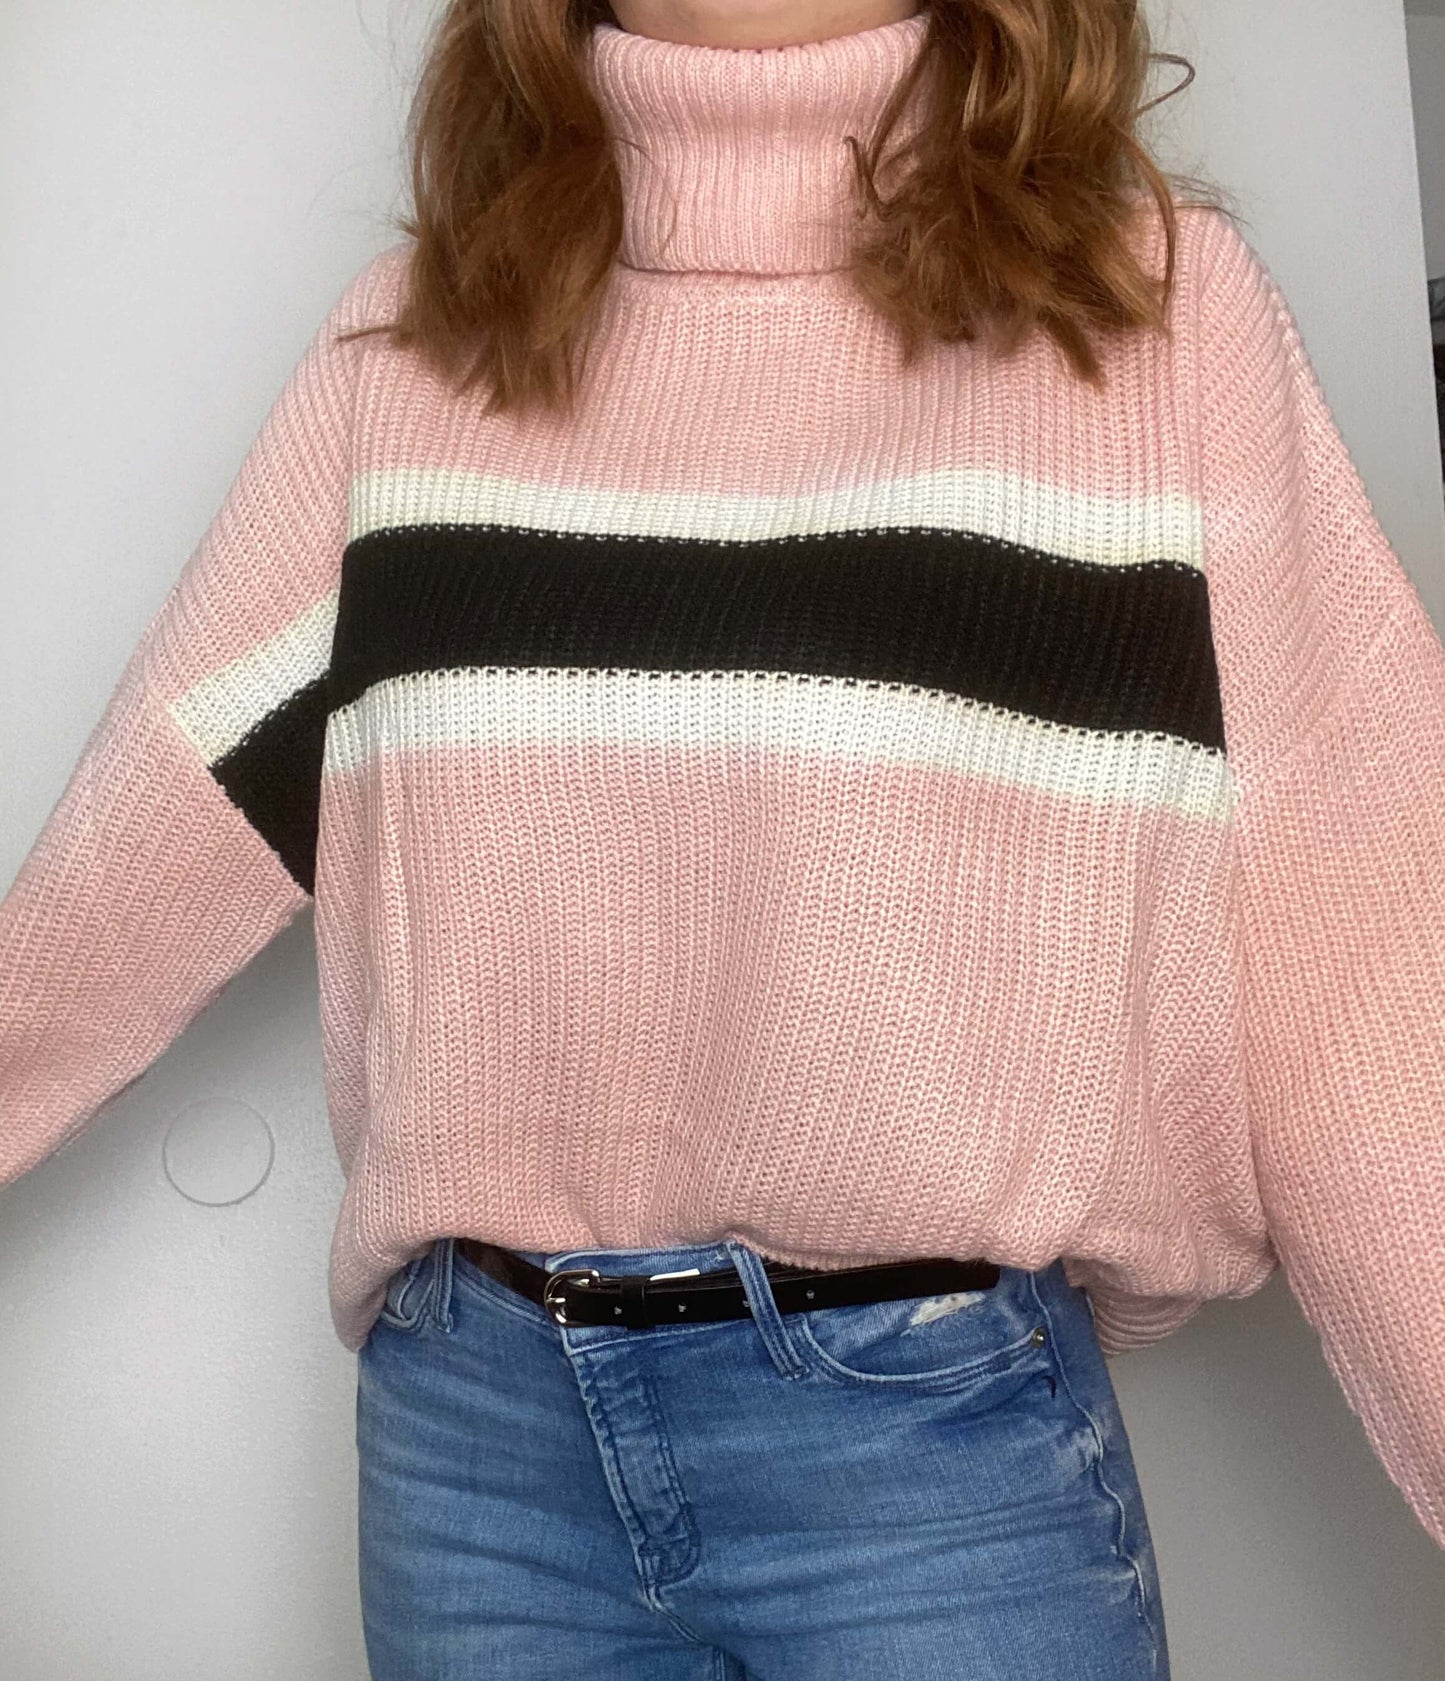 Pink Turtleneck Knit Striped Sweater